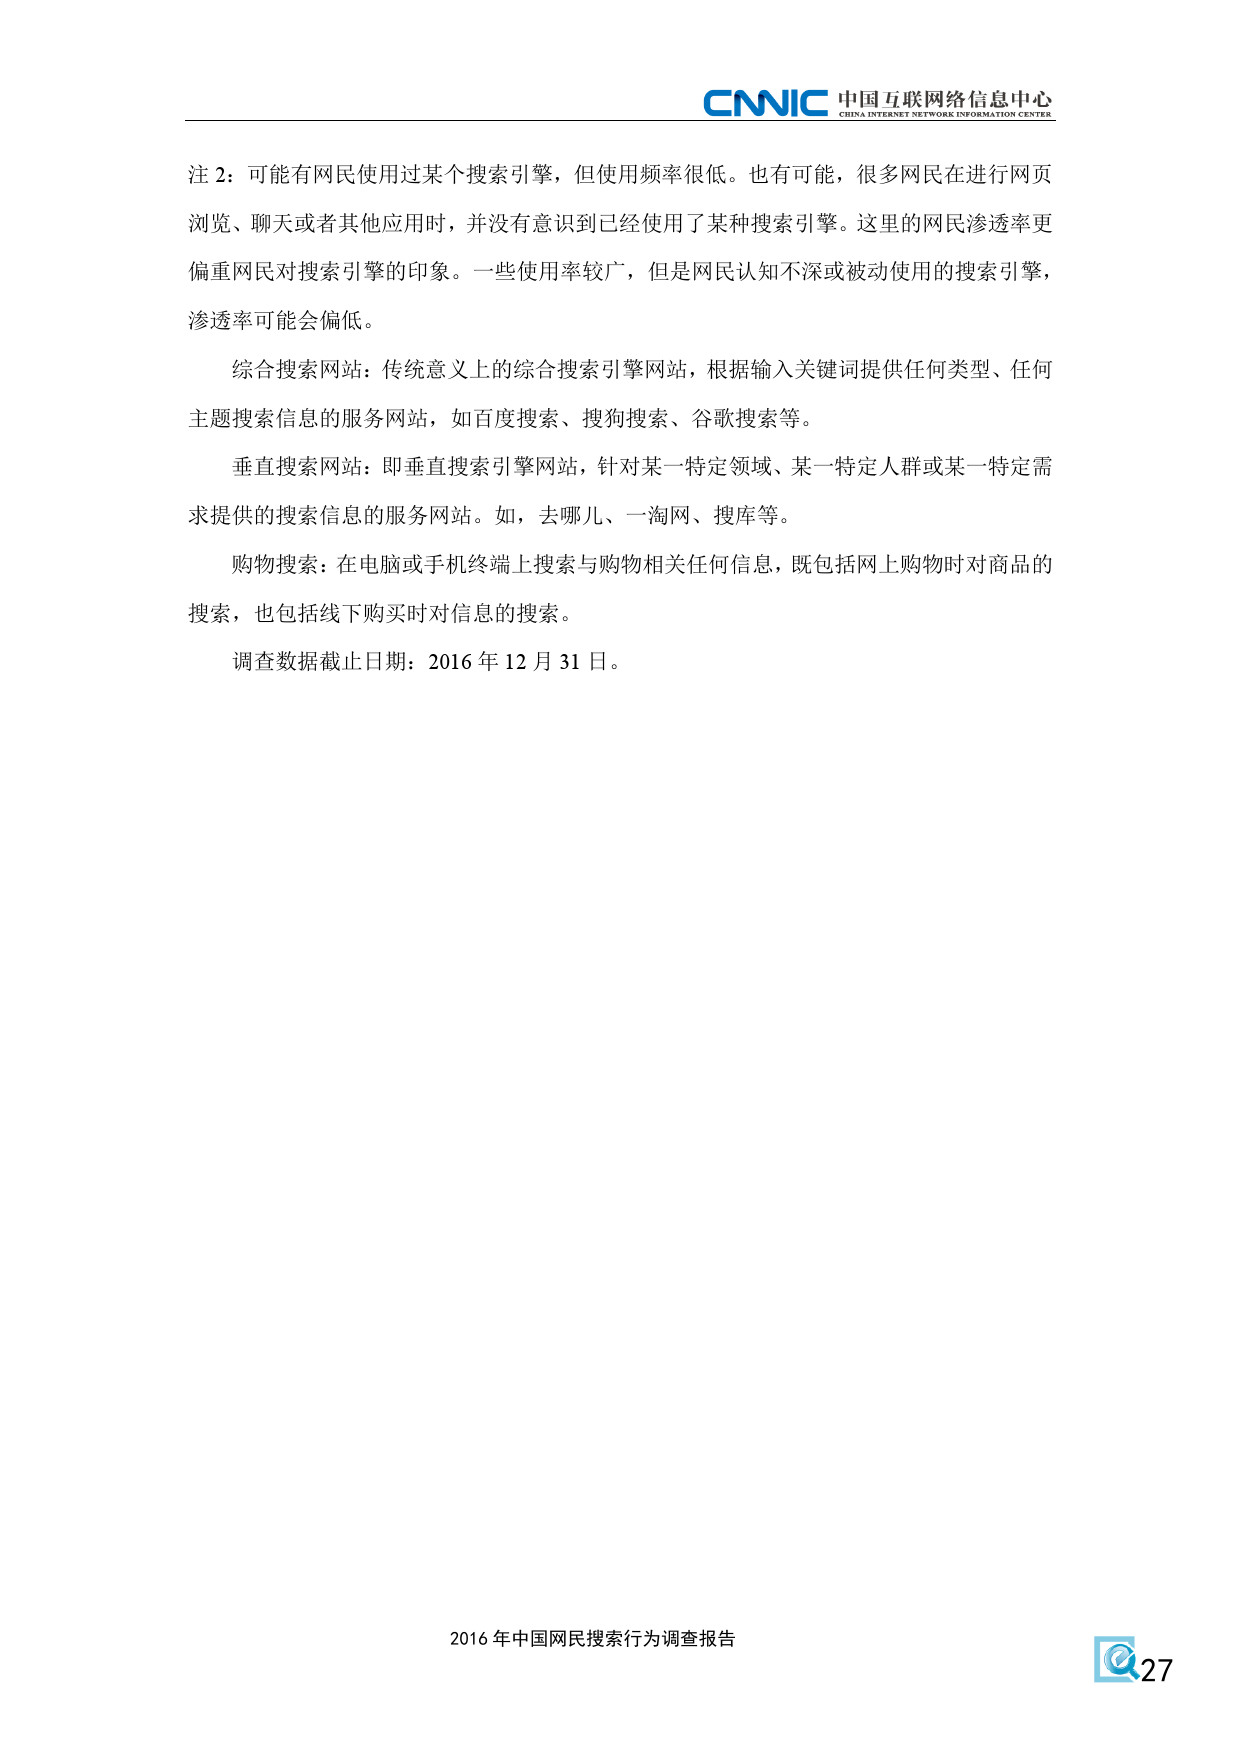 CNNIC：2016年中国网民搜索行为调查报告-Ceacer 网安